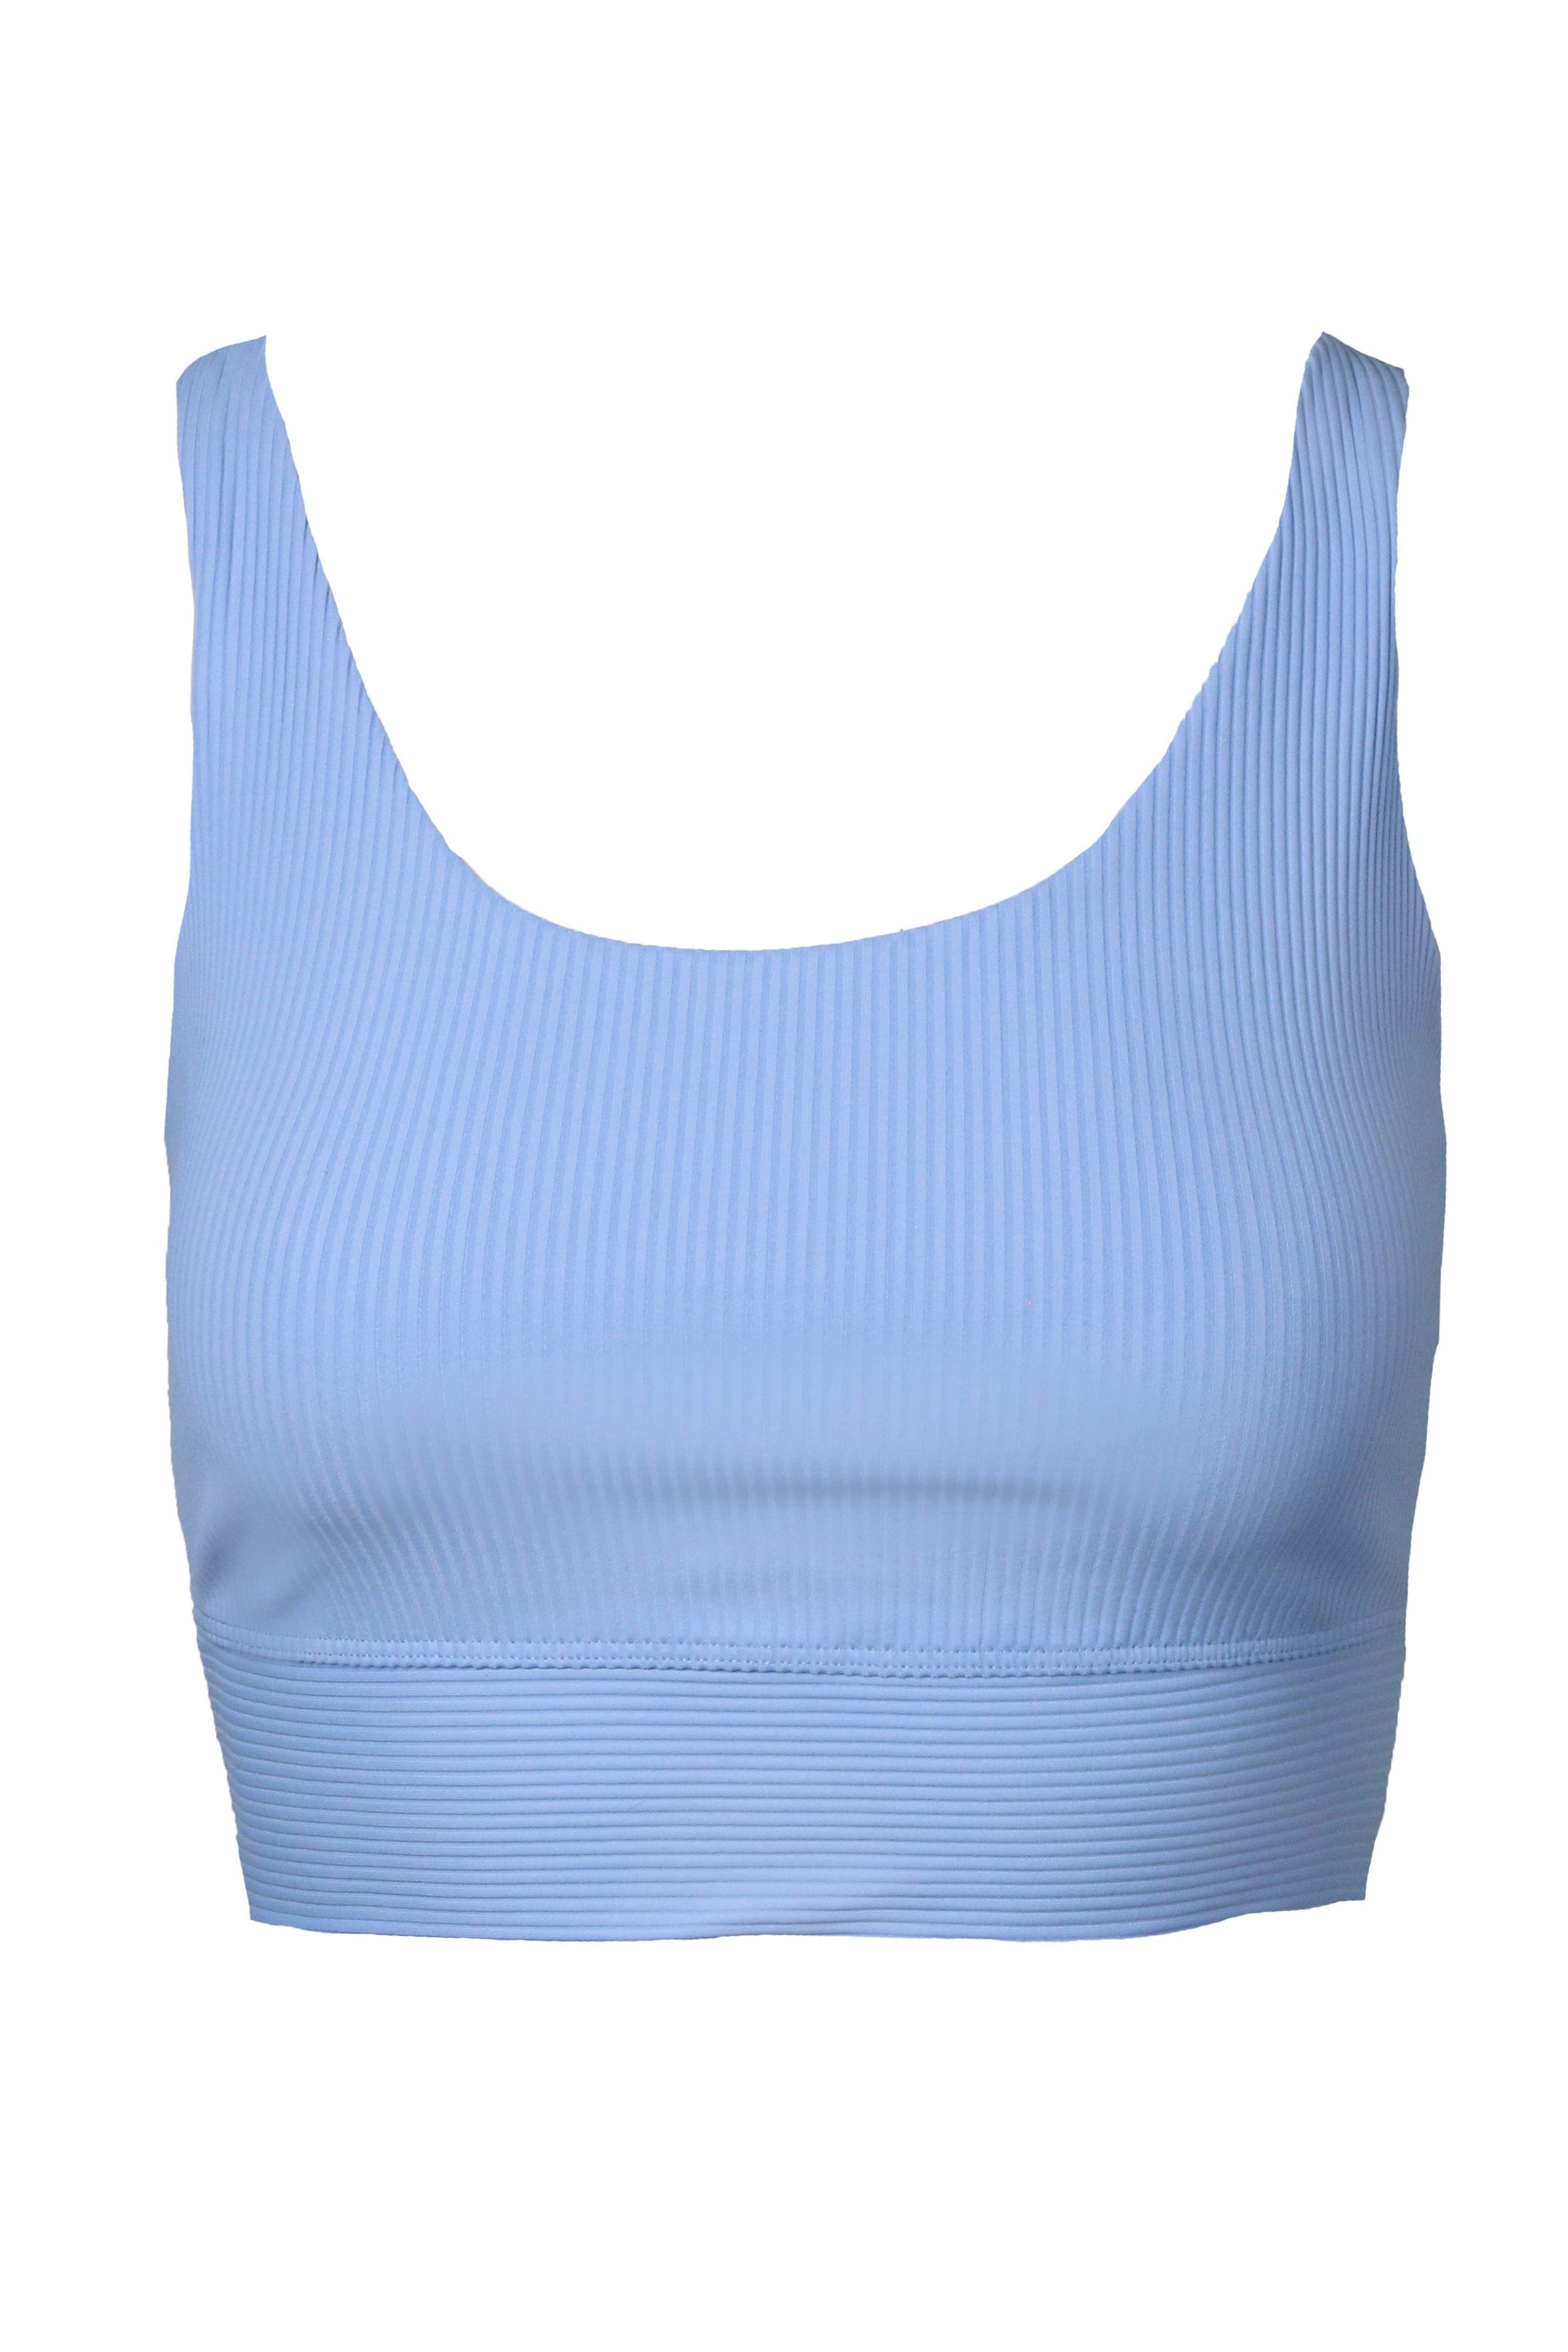 Brook & Vale, Intimates & Sleepwear, Strappy Low Cut Adjustable Light  Blue Gingham Sports Bra